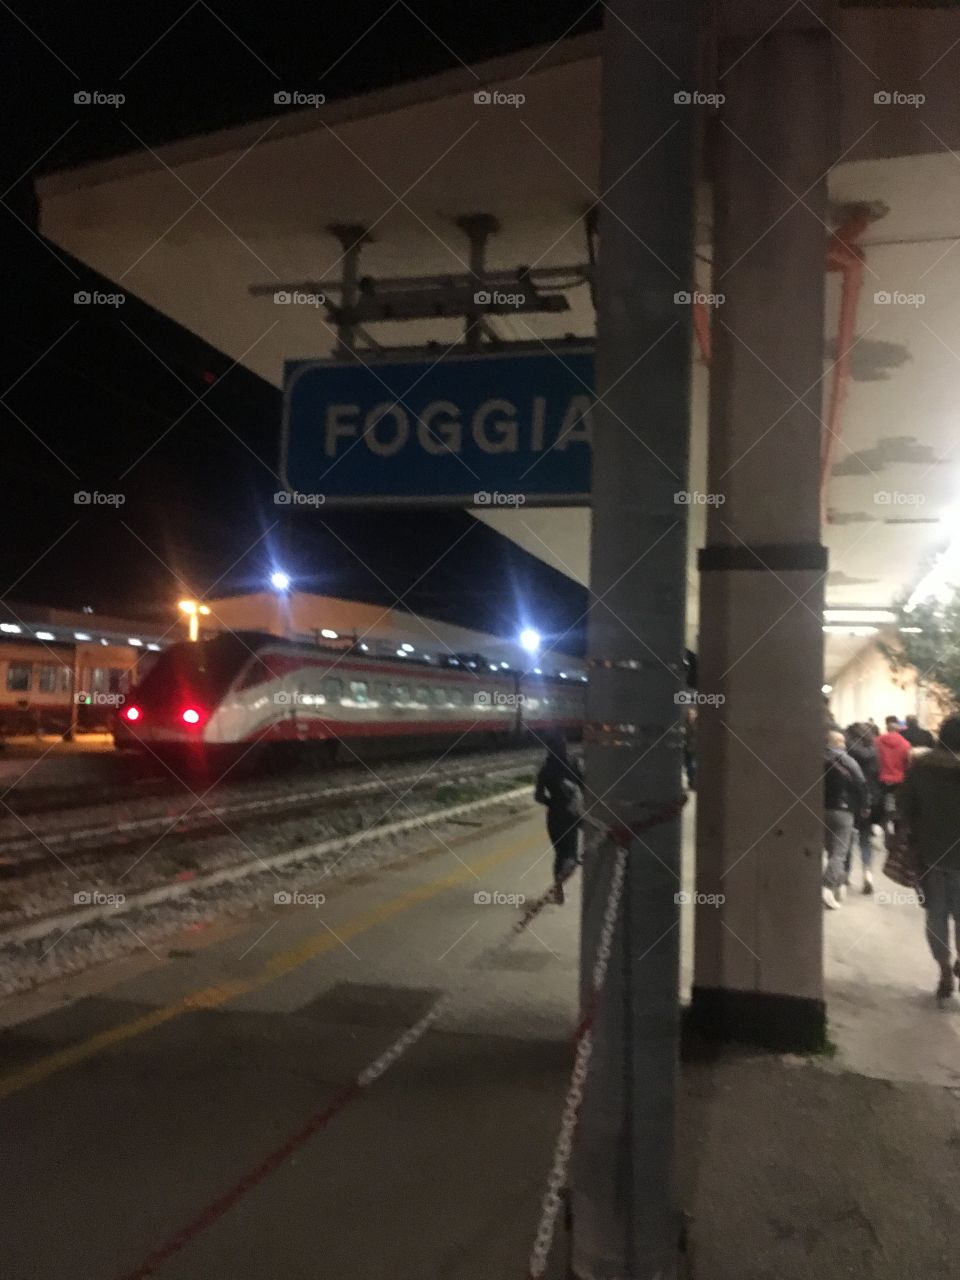 Station of Foggia